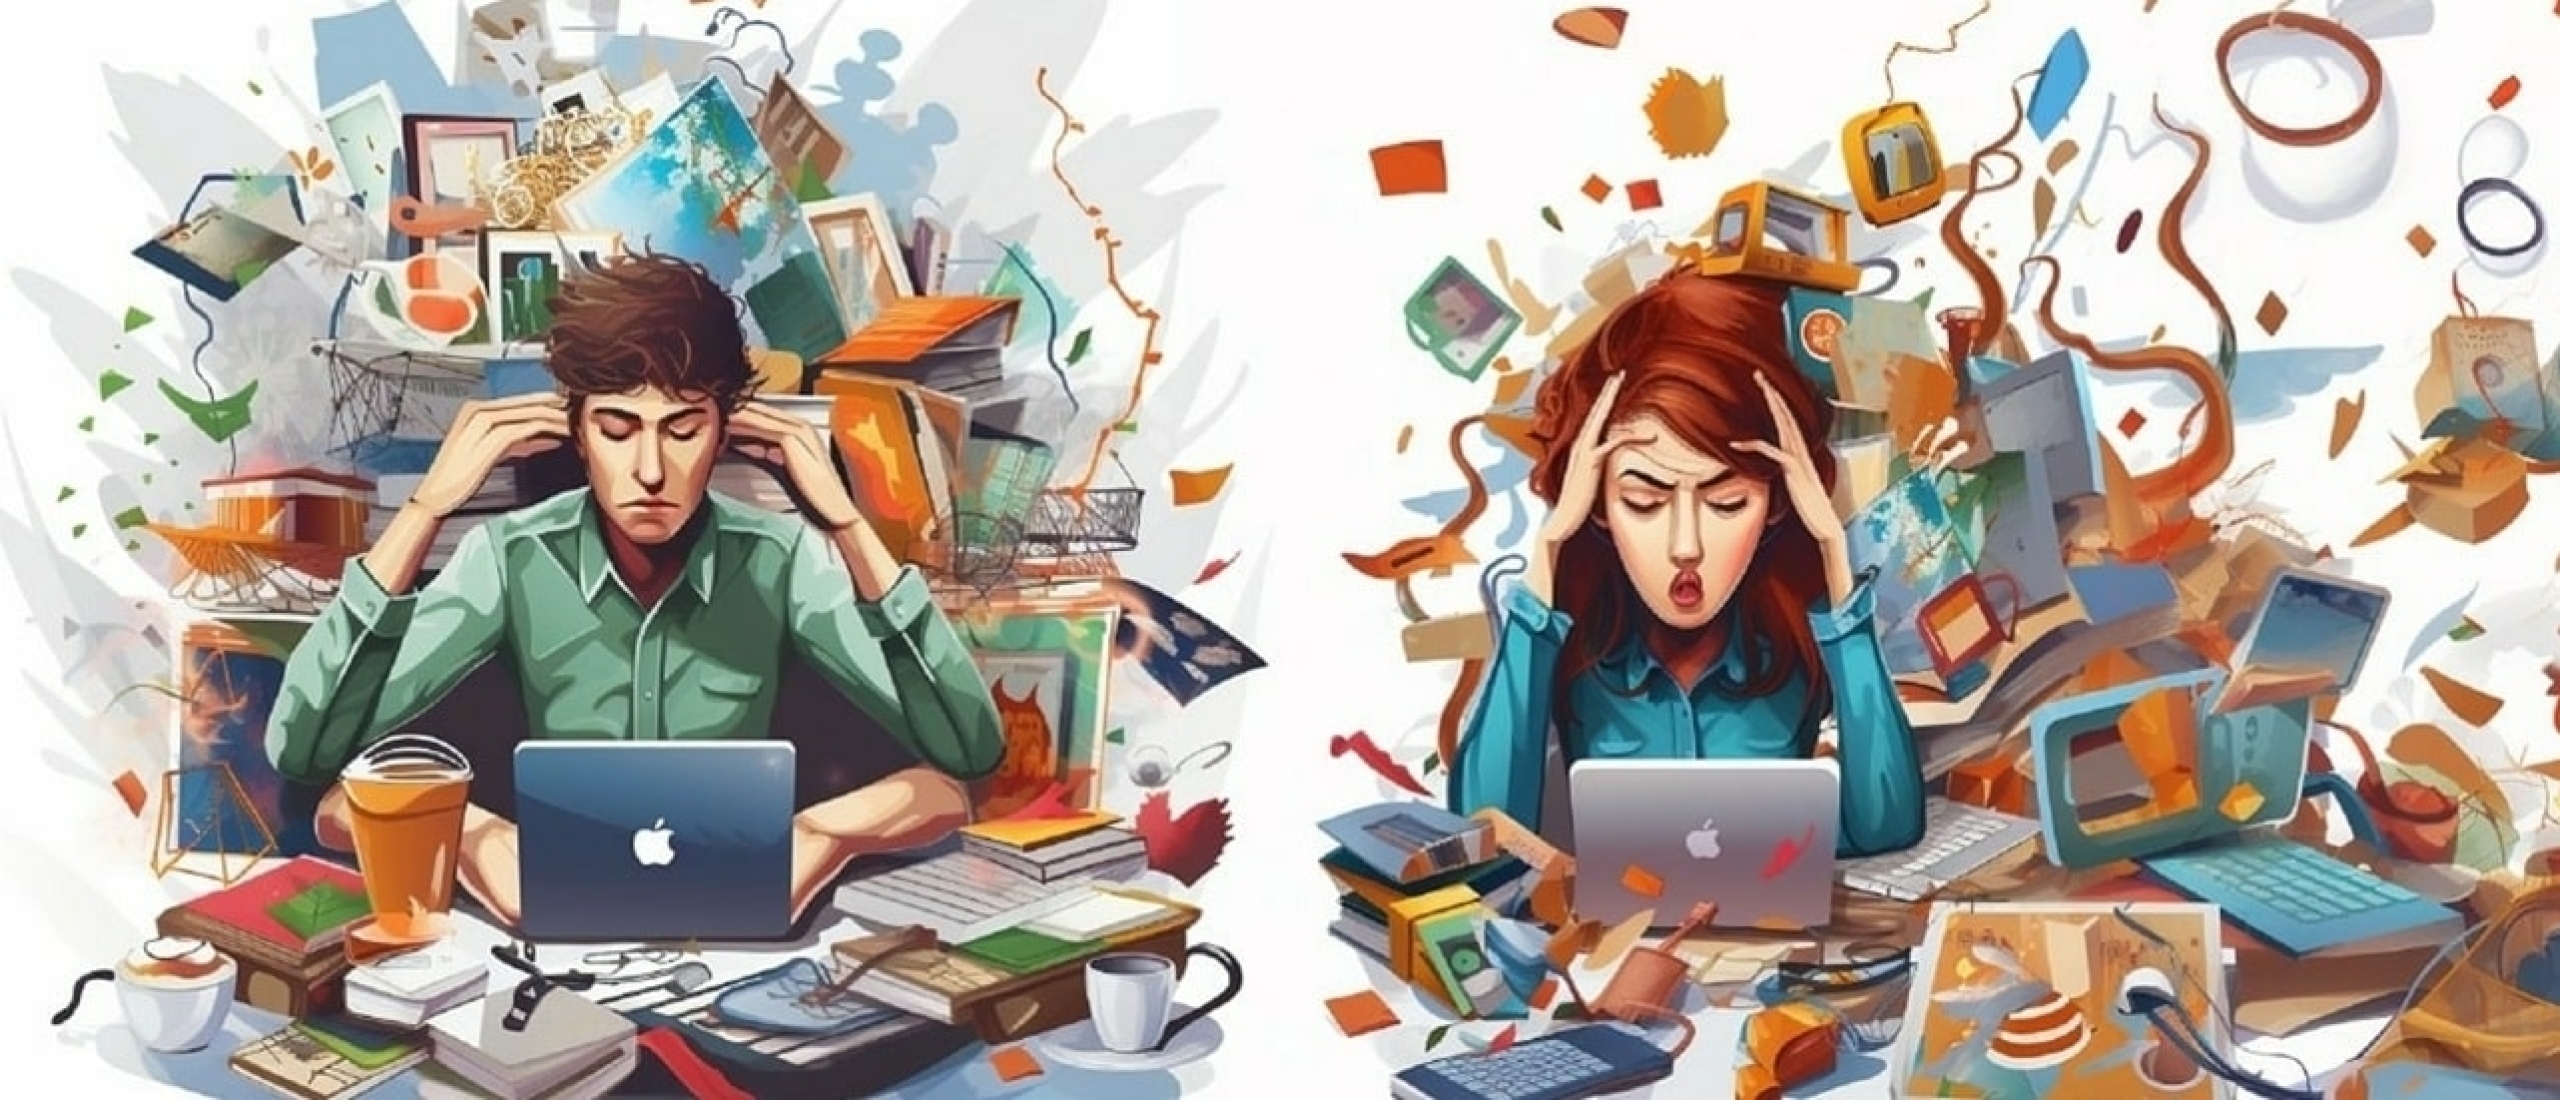 Hoe herken je oplopende stress bij je werknemer?